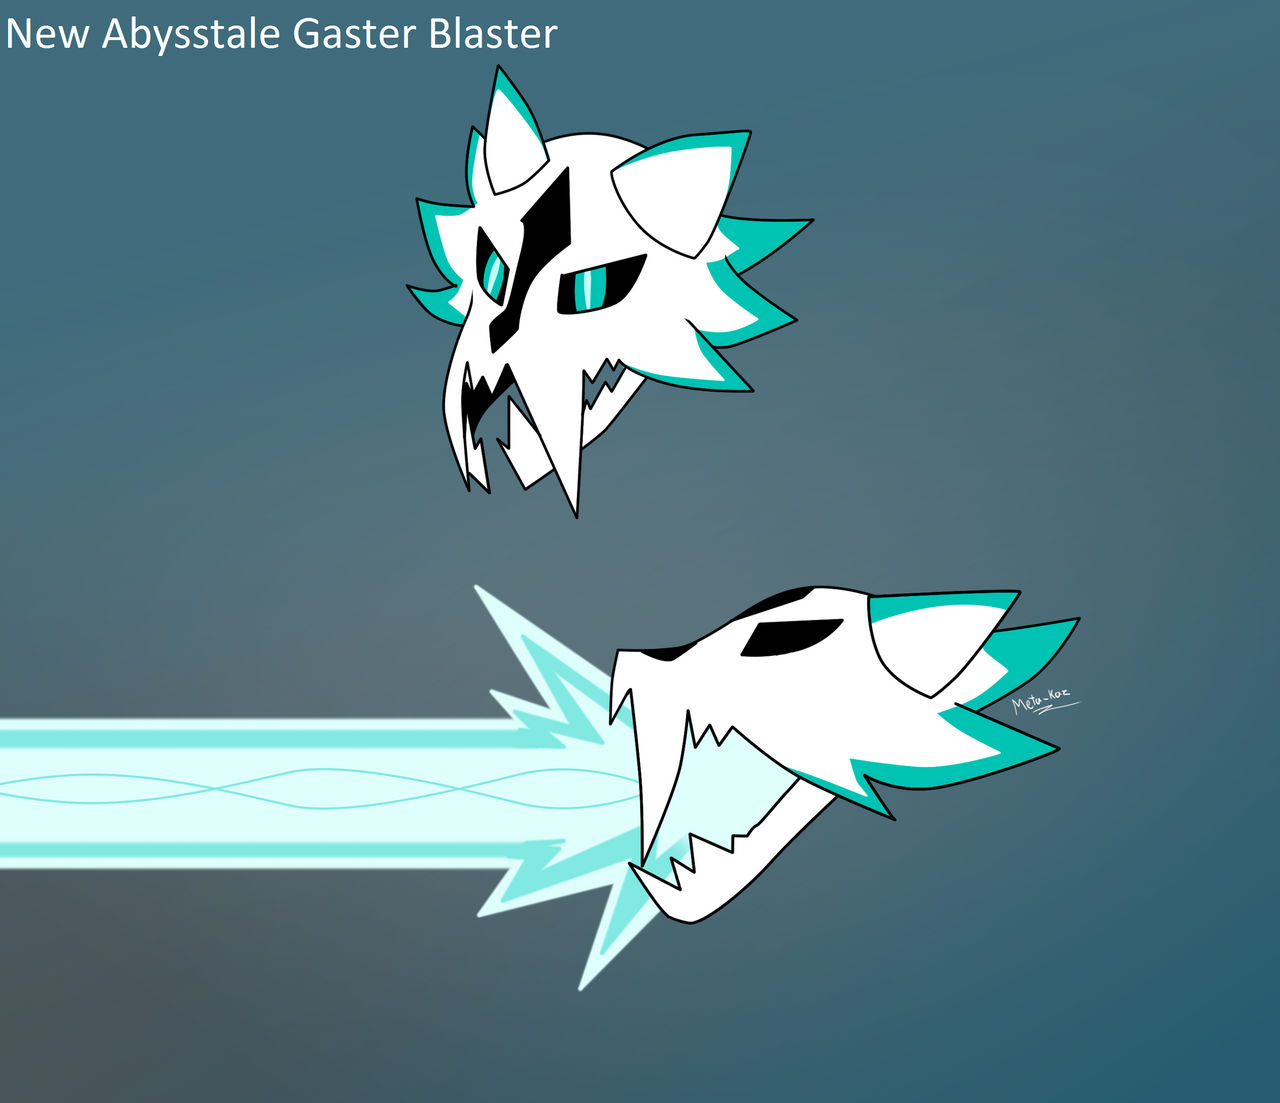 New Abysstale Gaster Blaster Concept by Meta-Kaz on DeviantArt